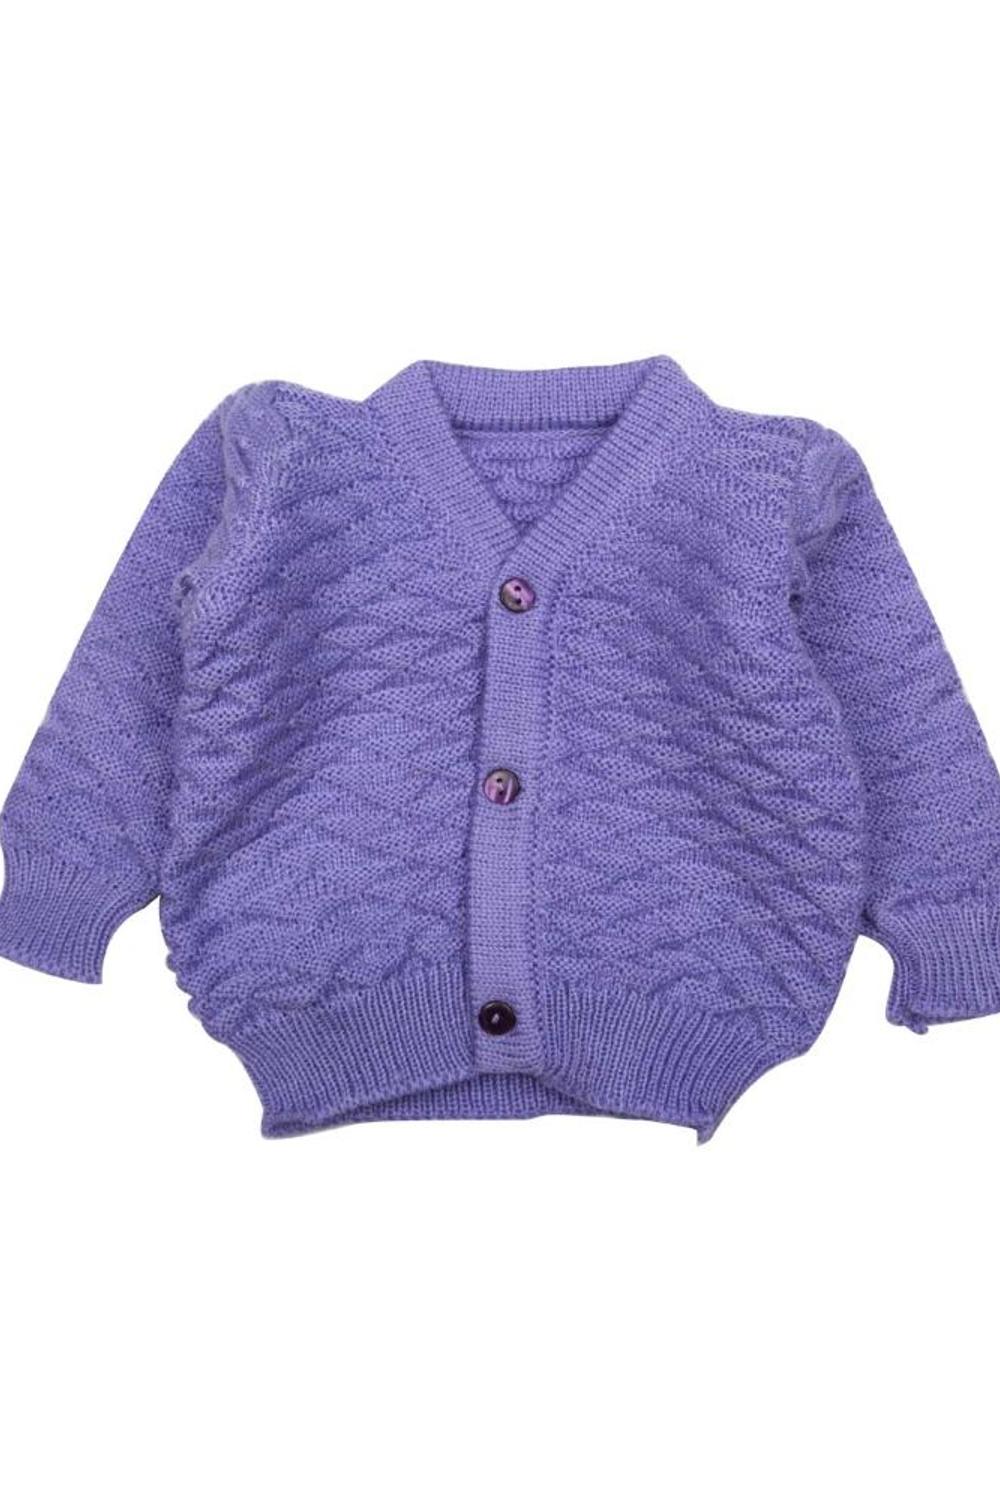 Mee Mee Baby Sweater Sets (Purple)